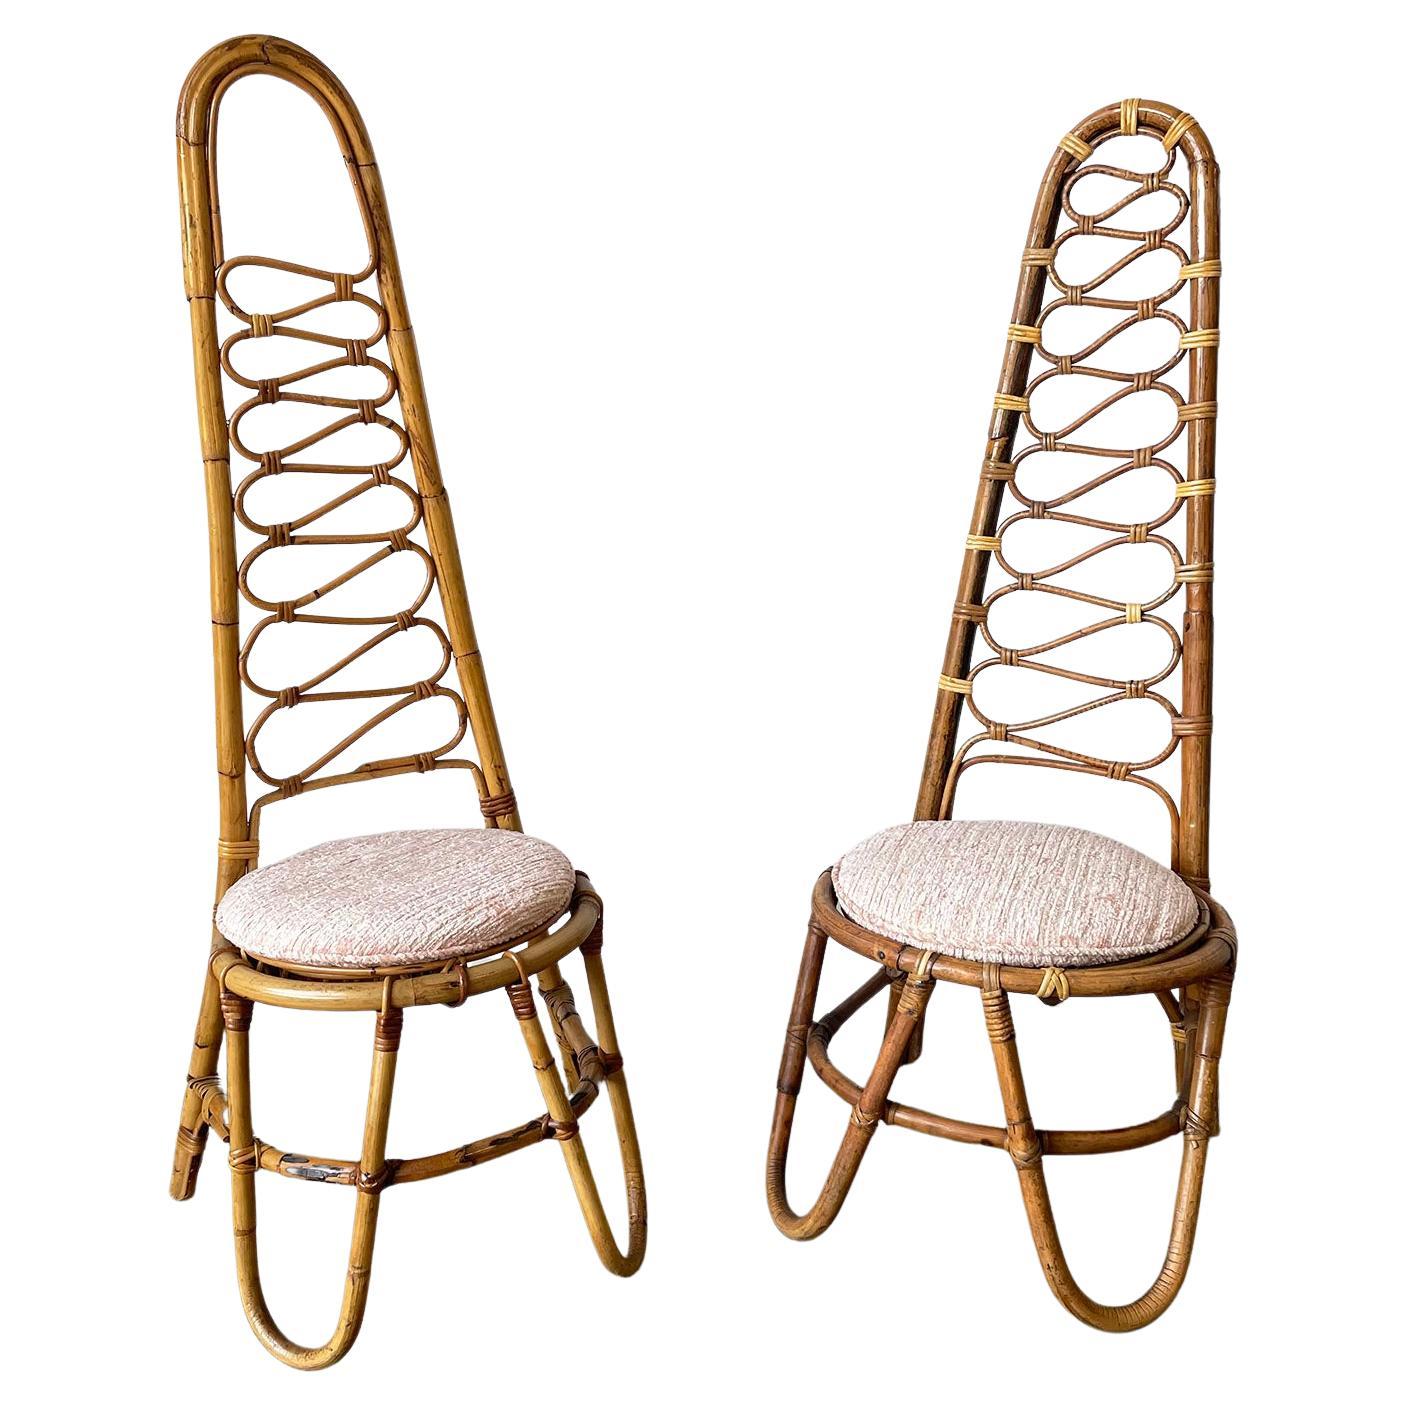 Italian Rattan and Bamboo High Back Chair